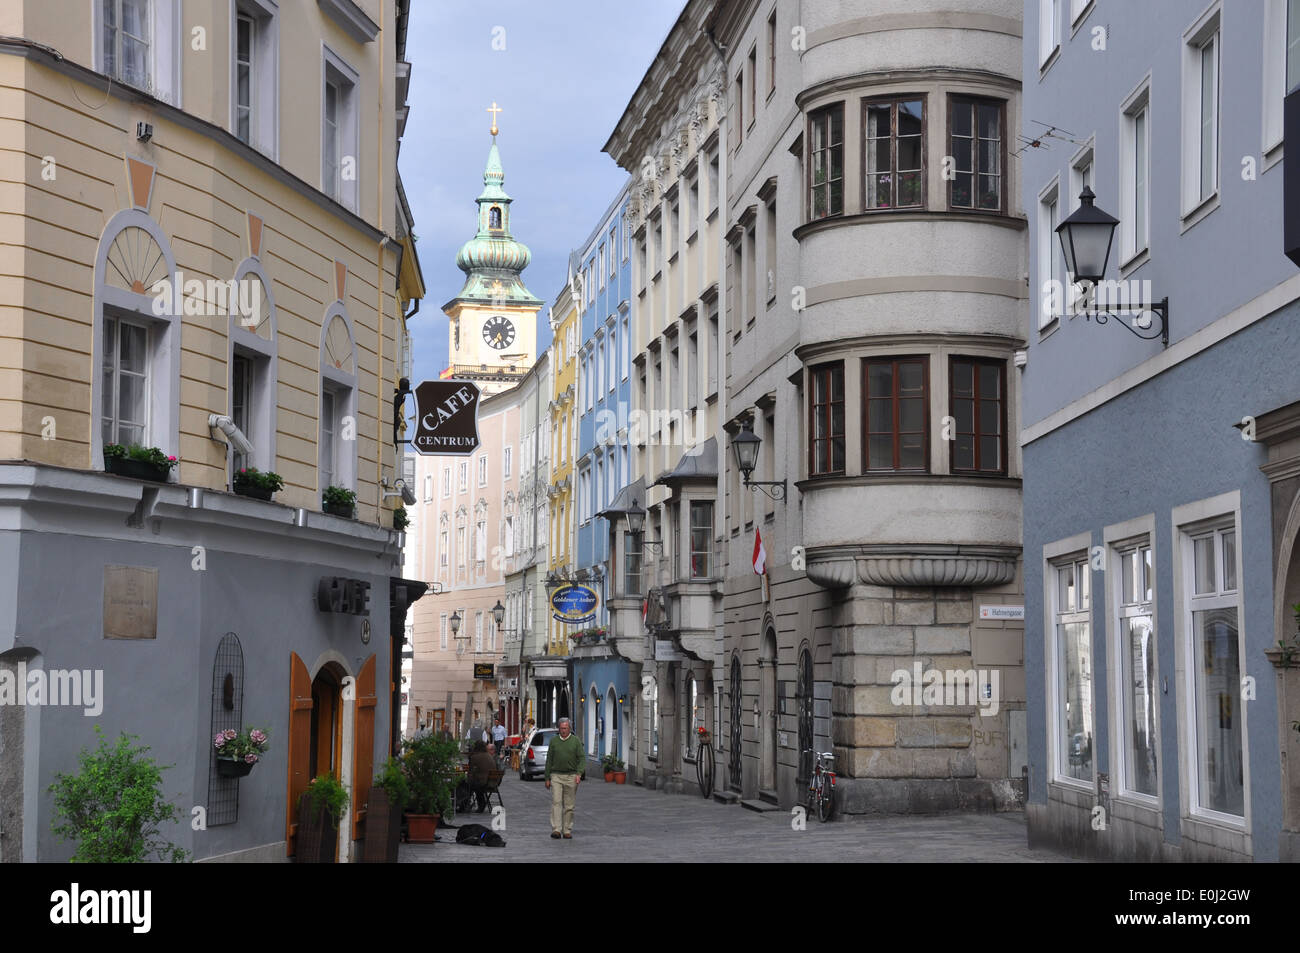 Street in Linz, Austria, showing street activity. Stock Photo